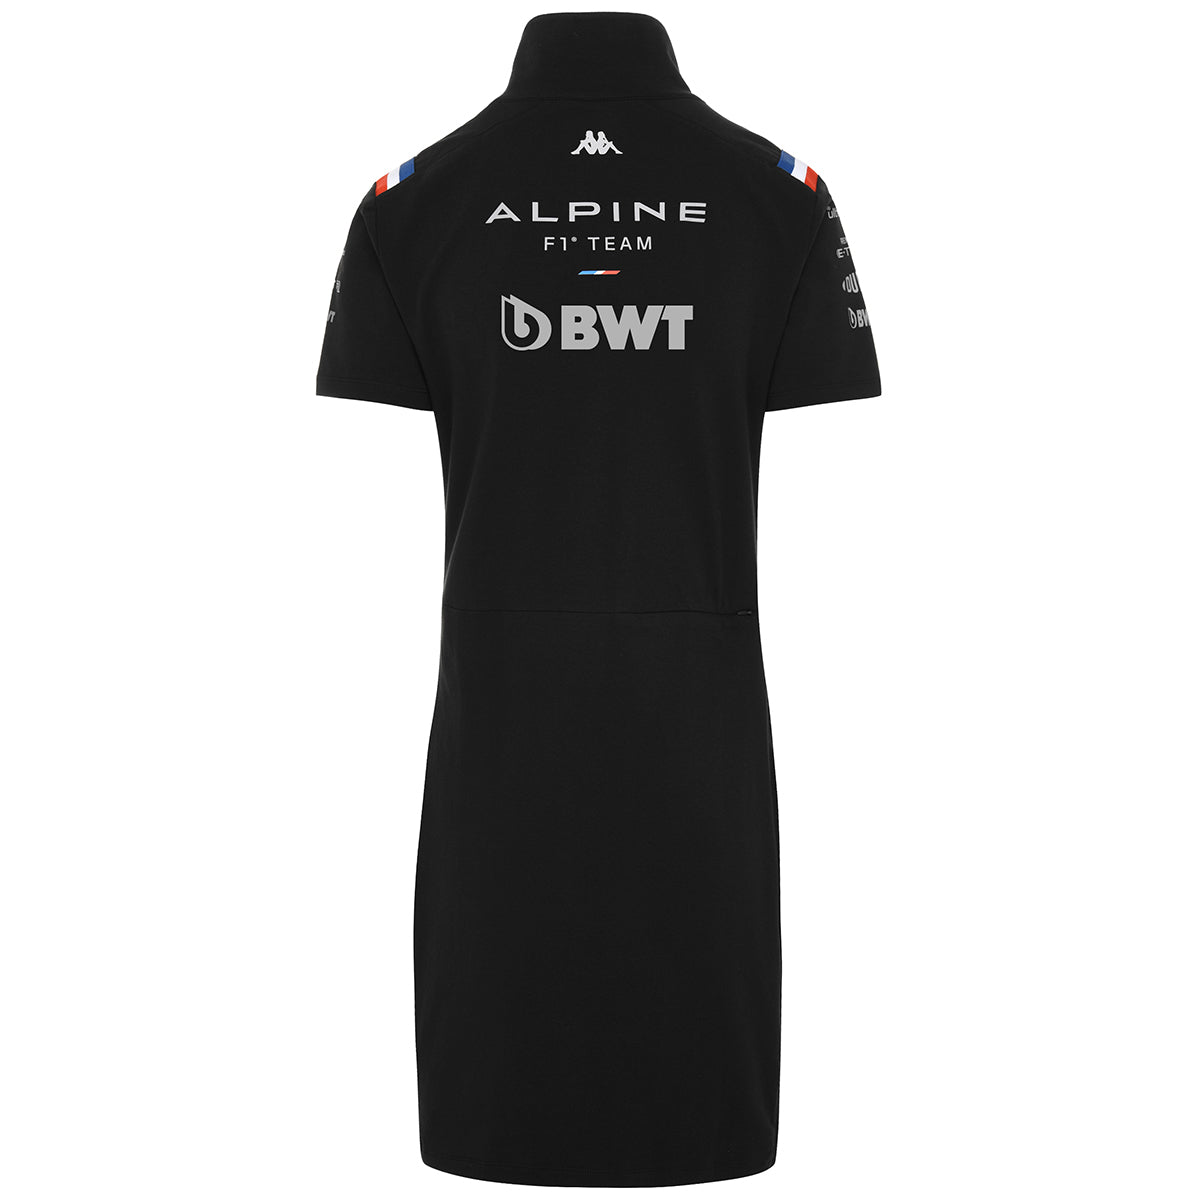 Robe Arukif BWT Alpine F1 Team Noir Femme - Image 3